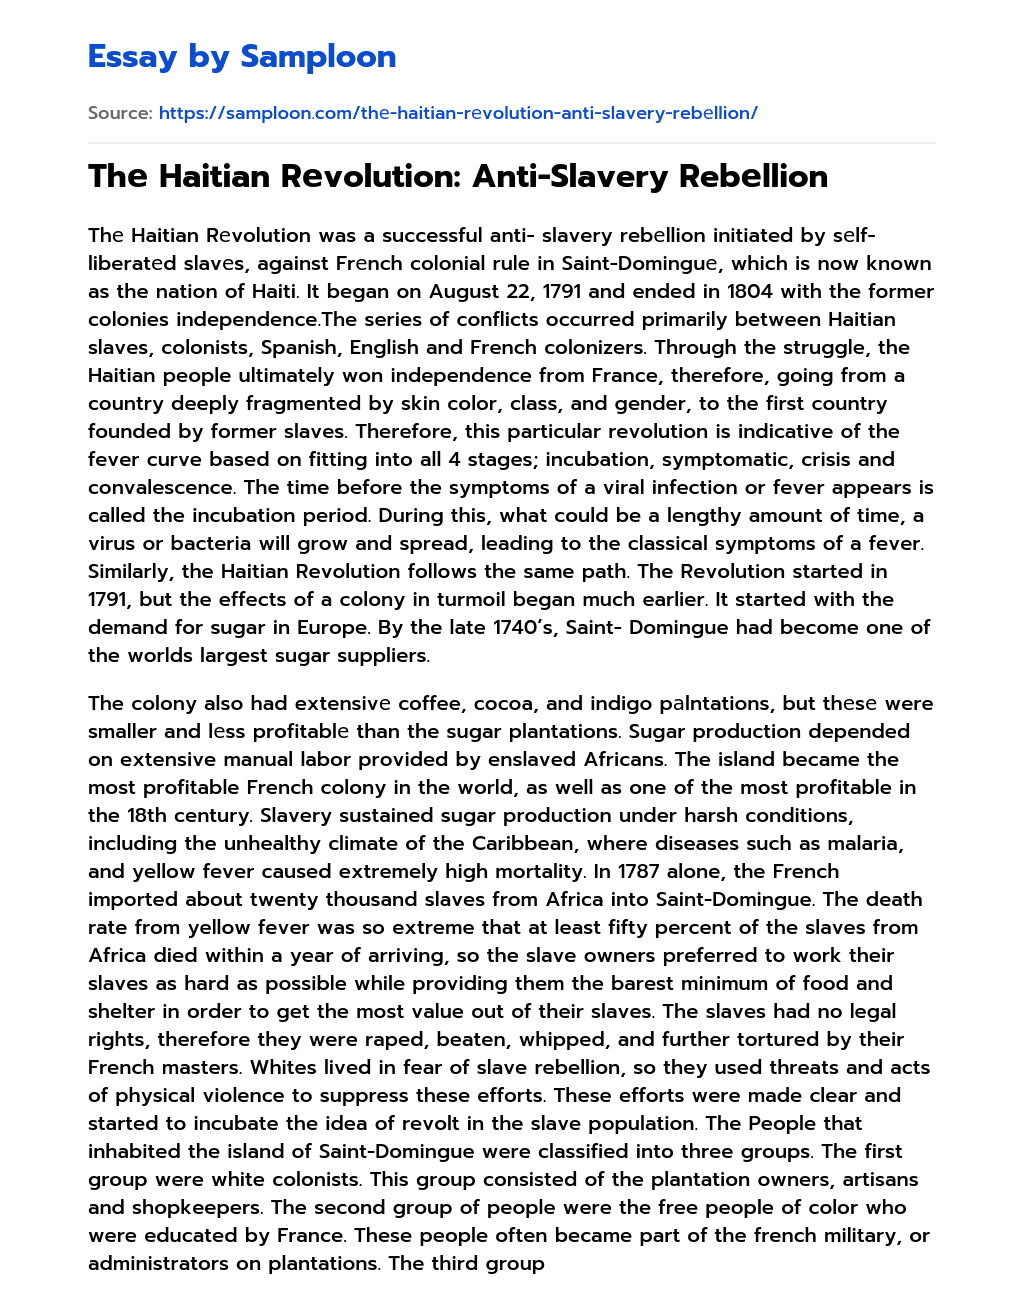 Thе Haitian Rеvolution: Anti-Slavery Rebеllion essay